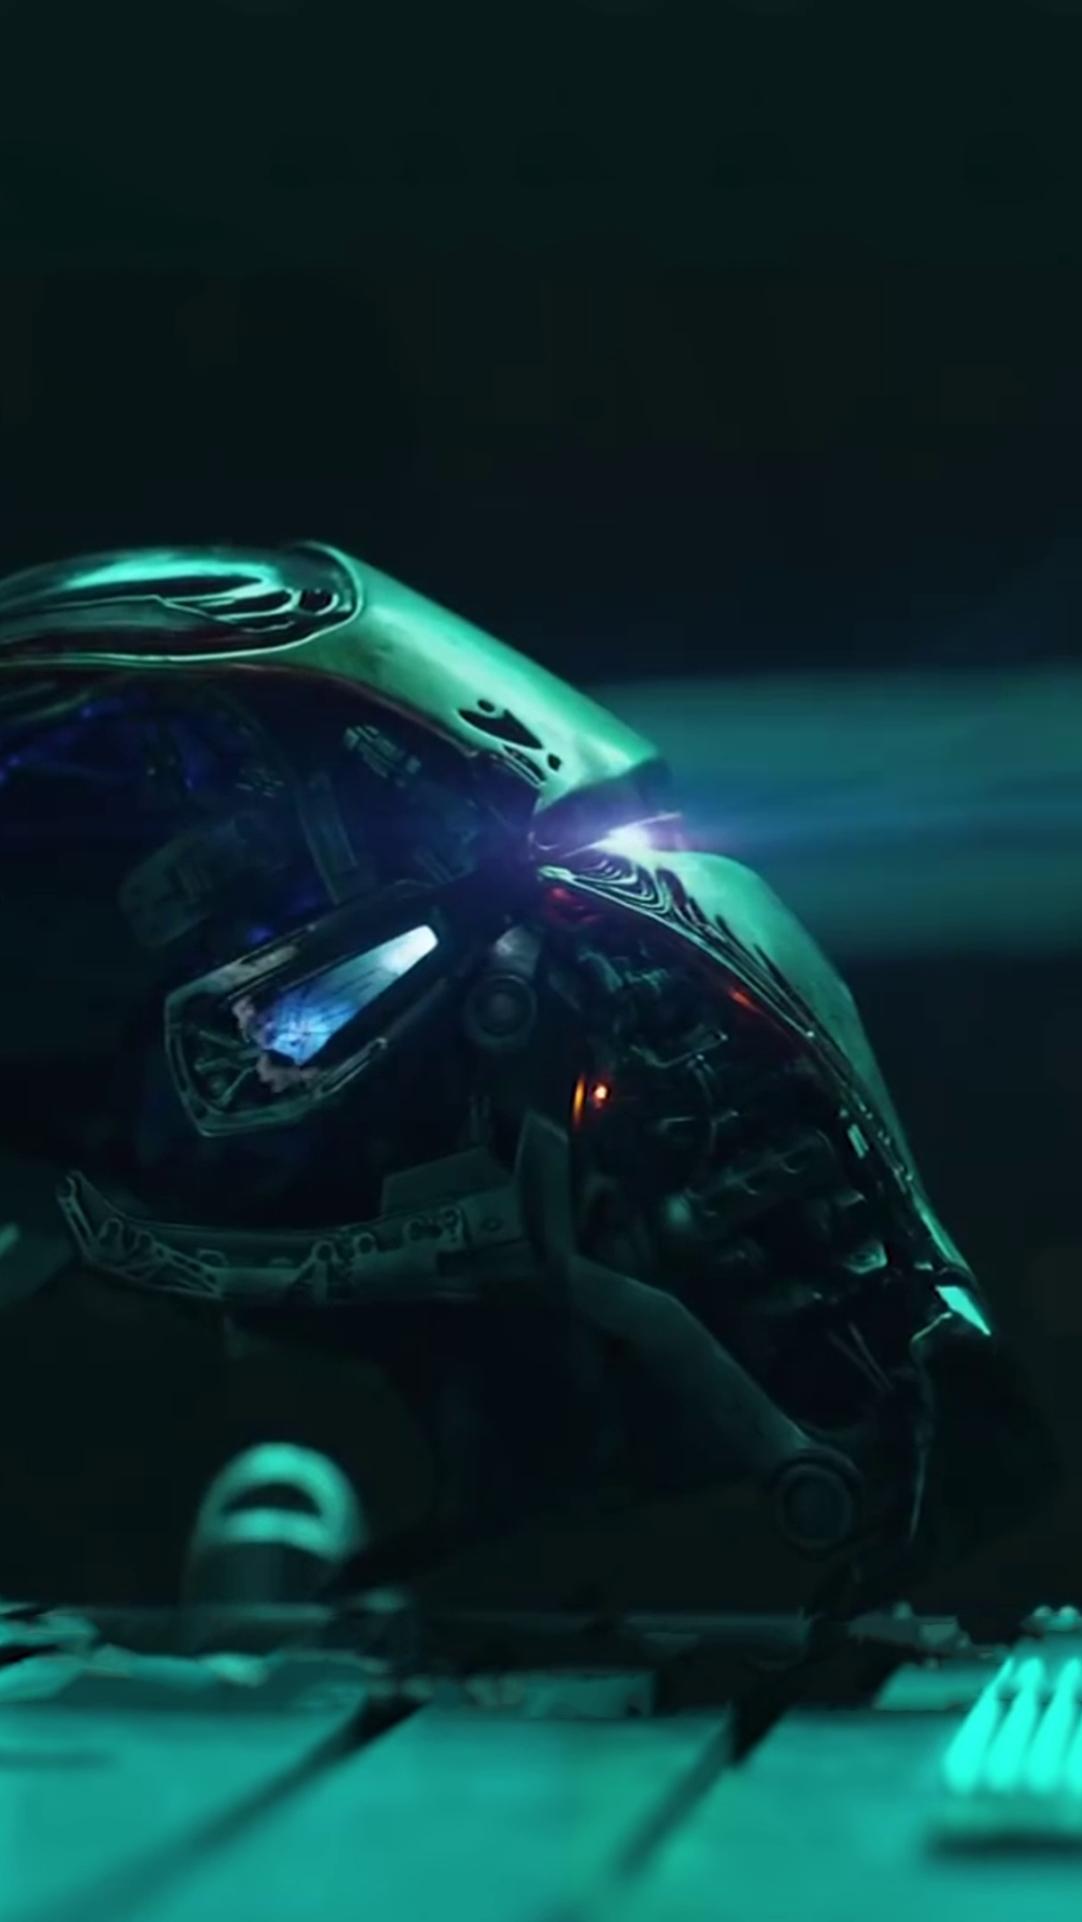 Iron Man Helmet From Avengers Endgame Wallpaper, HD Movies